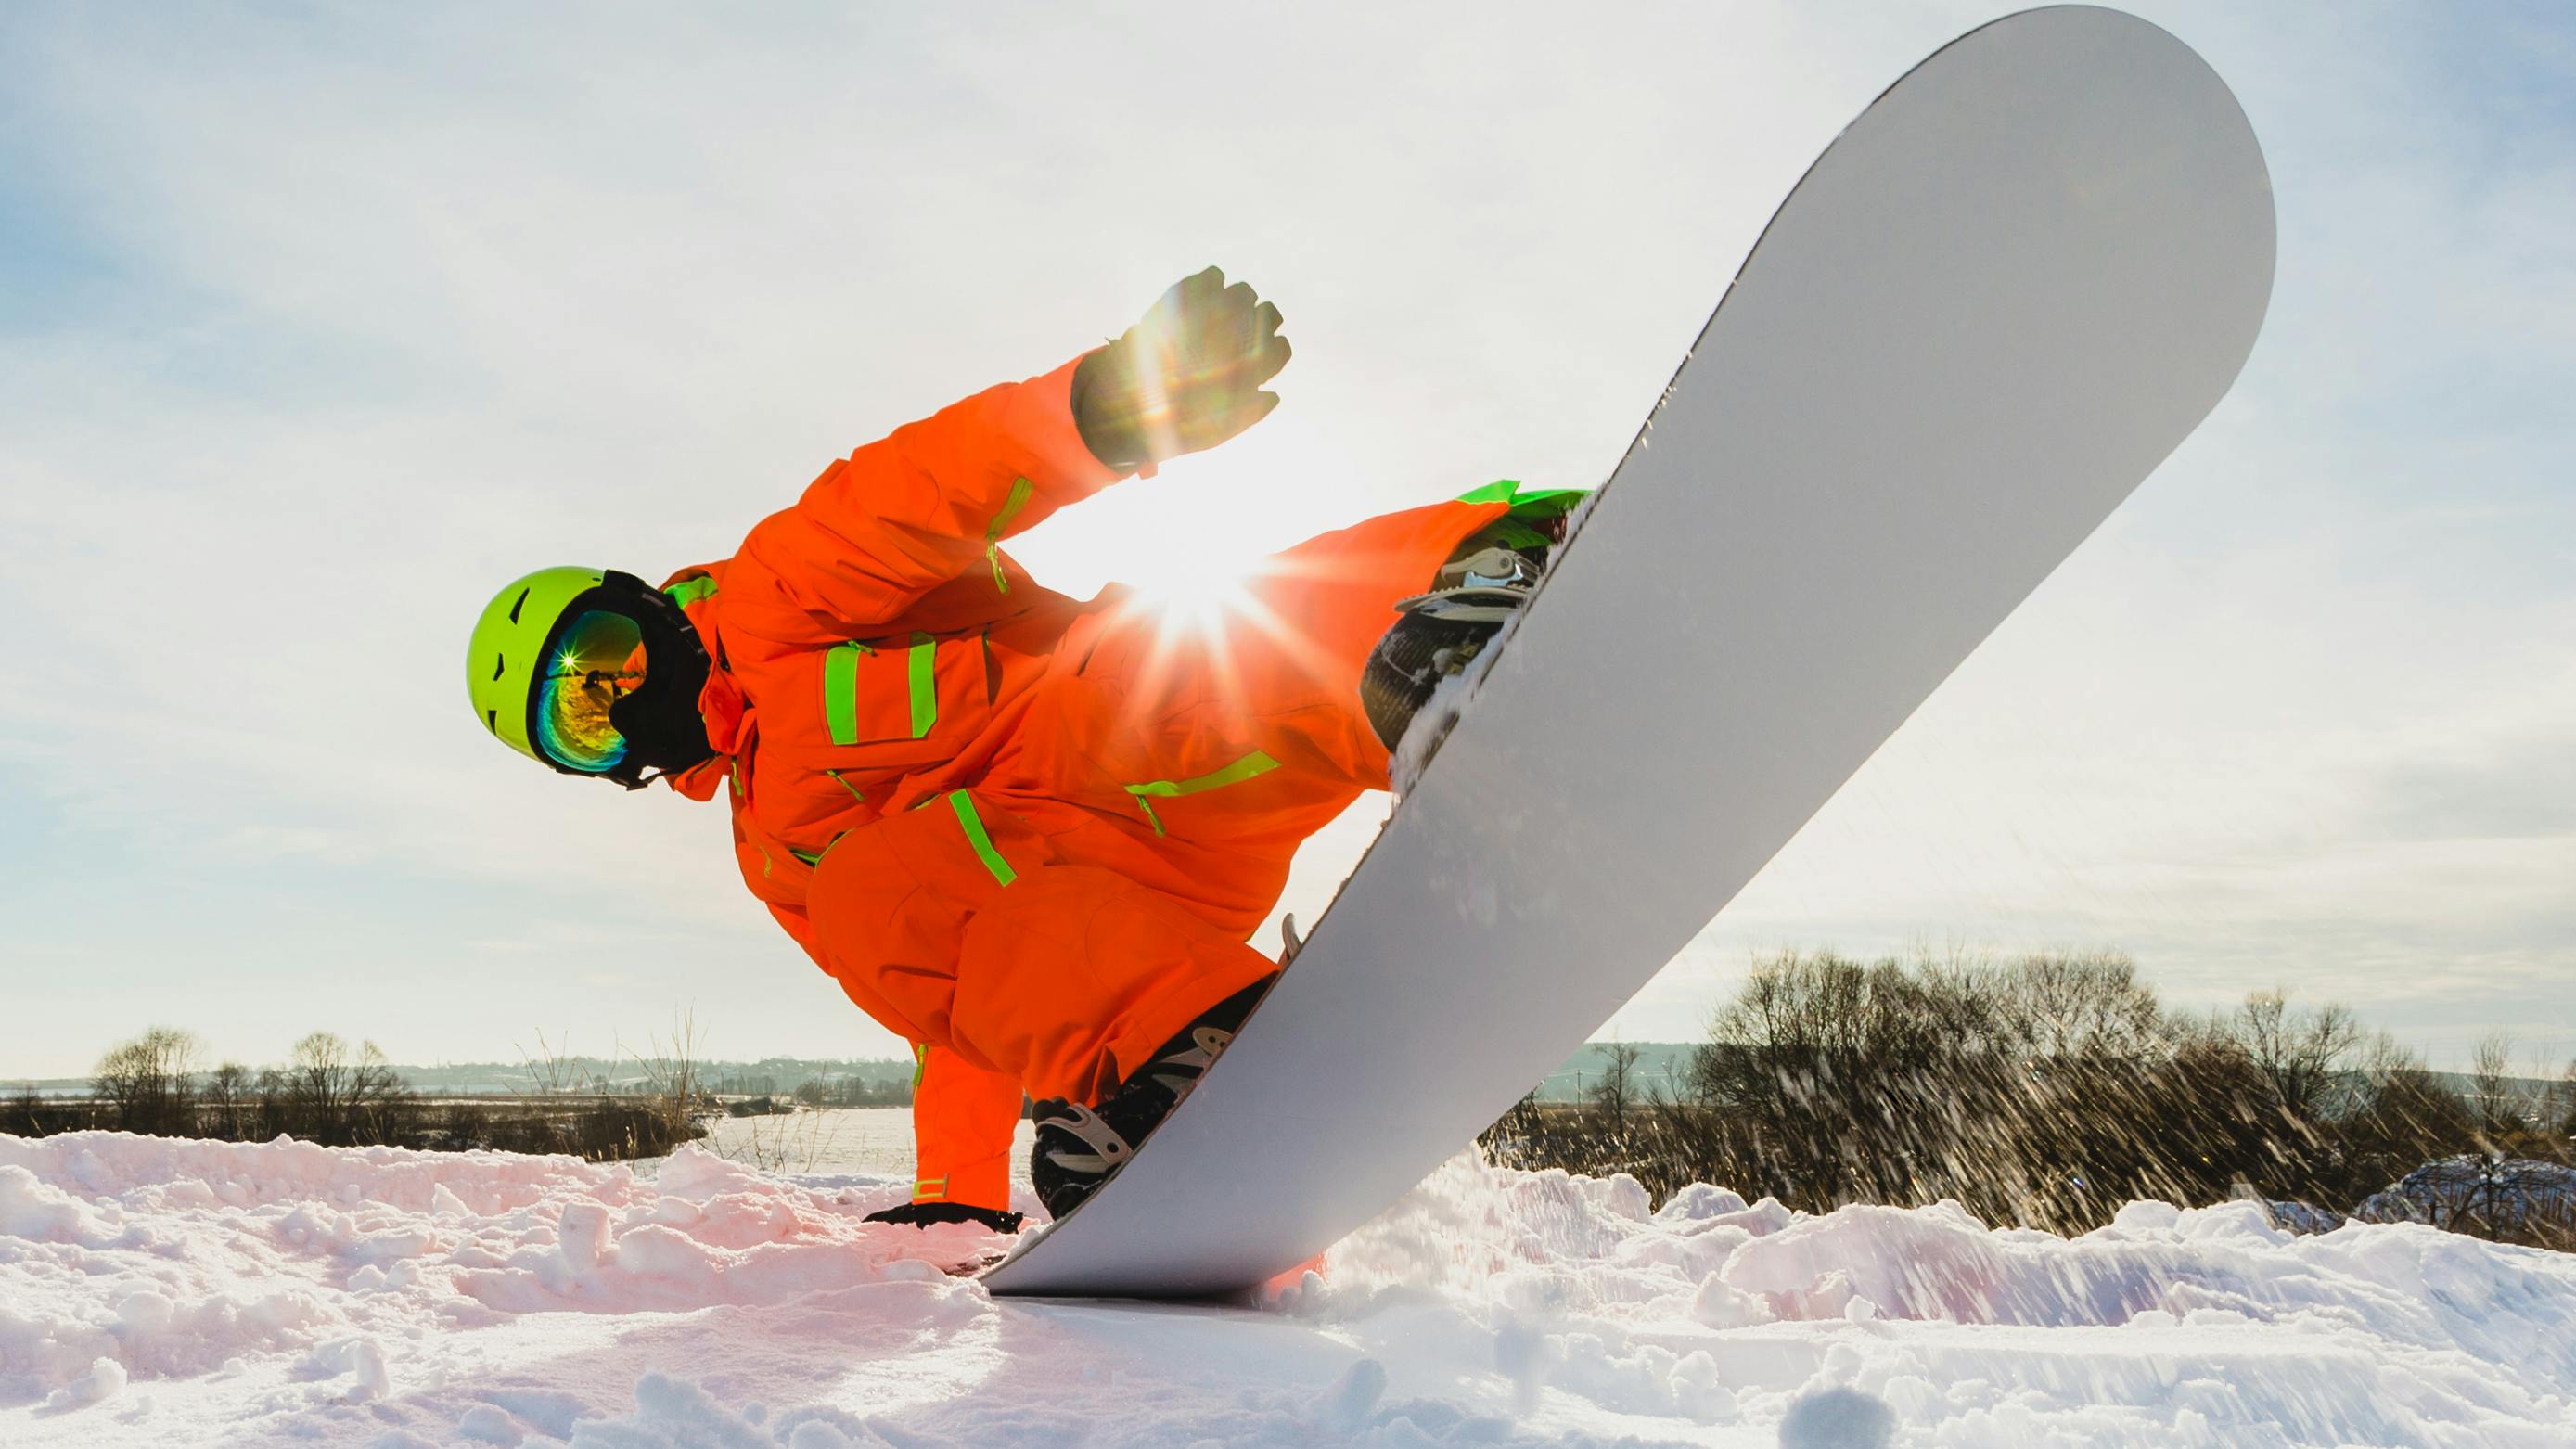 A snowboarder doing a butter trick. 